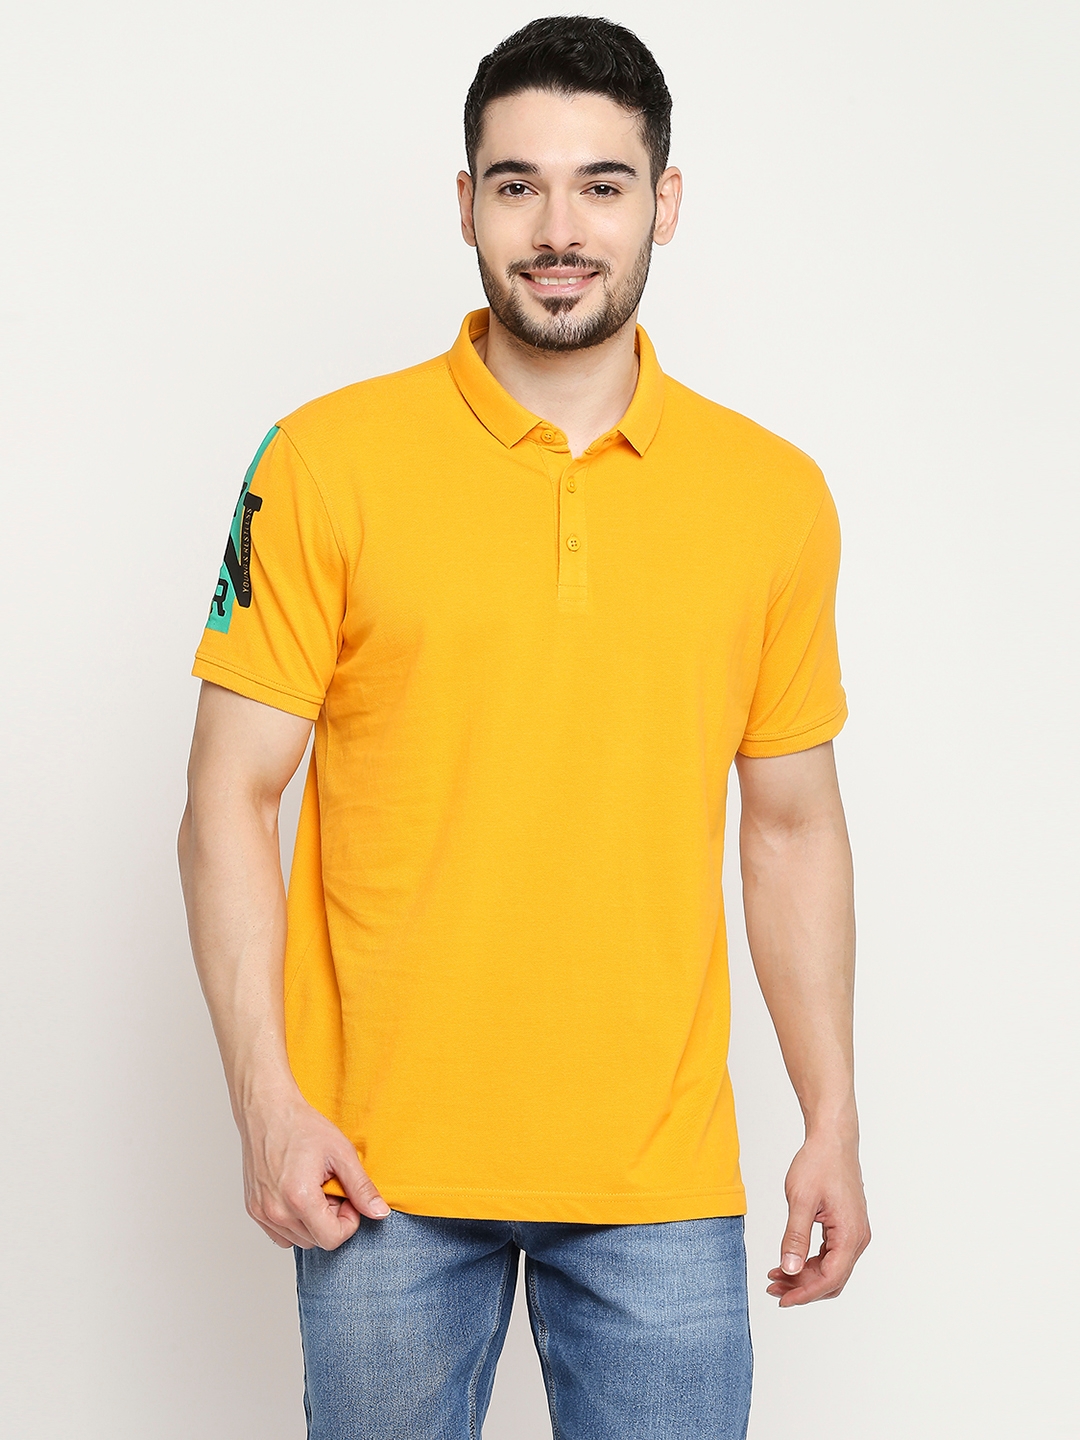 Spykar Chrome Yellow Cotton Half Sleeve Plain Casual T-Shirt For Men